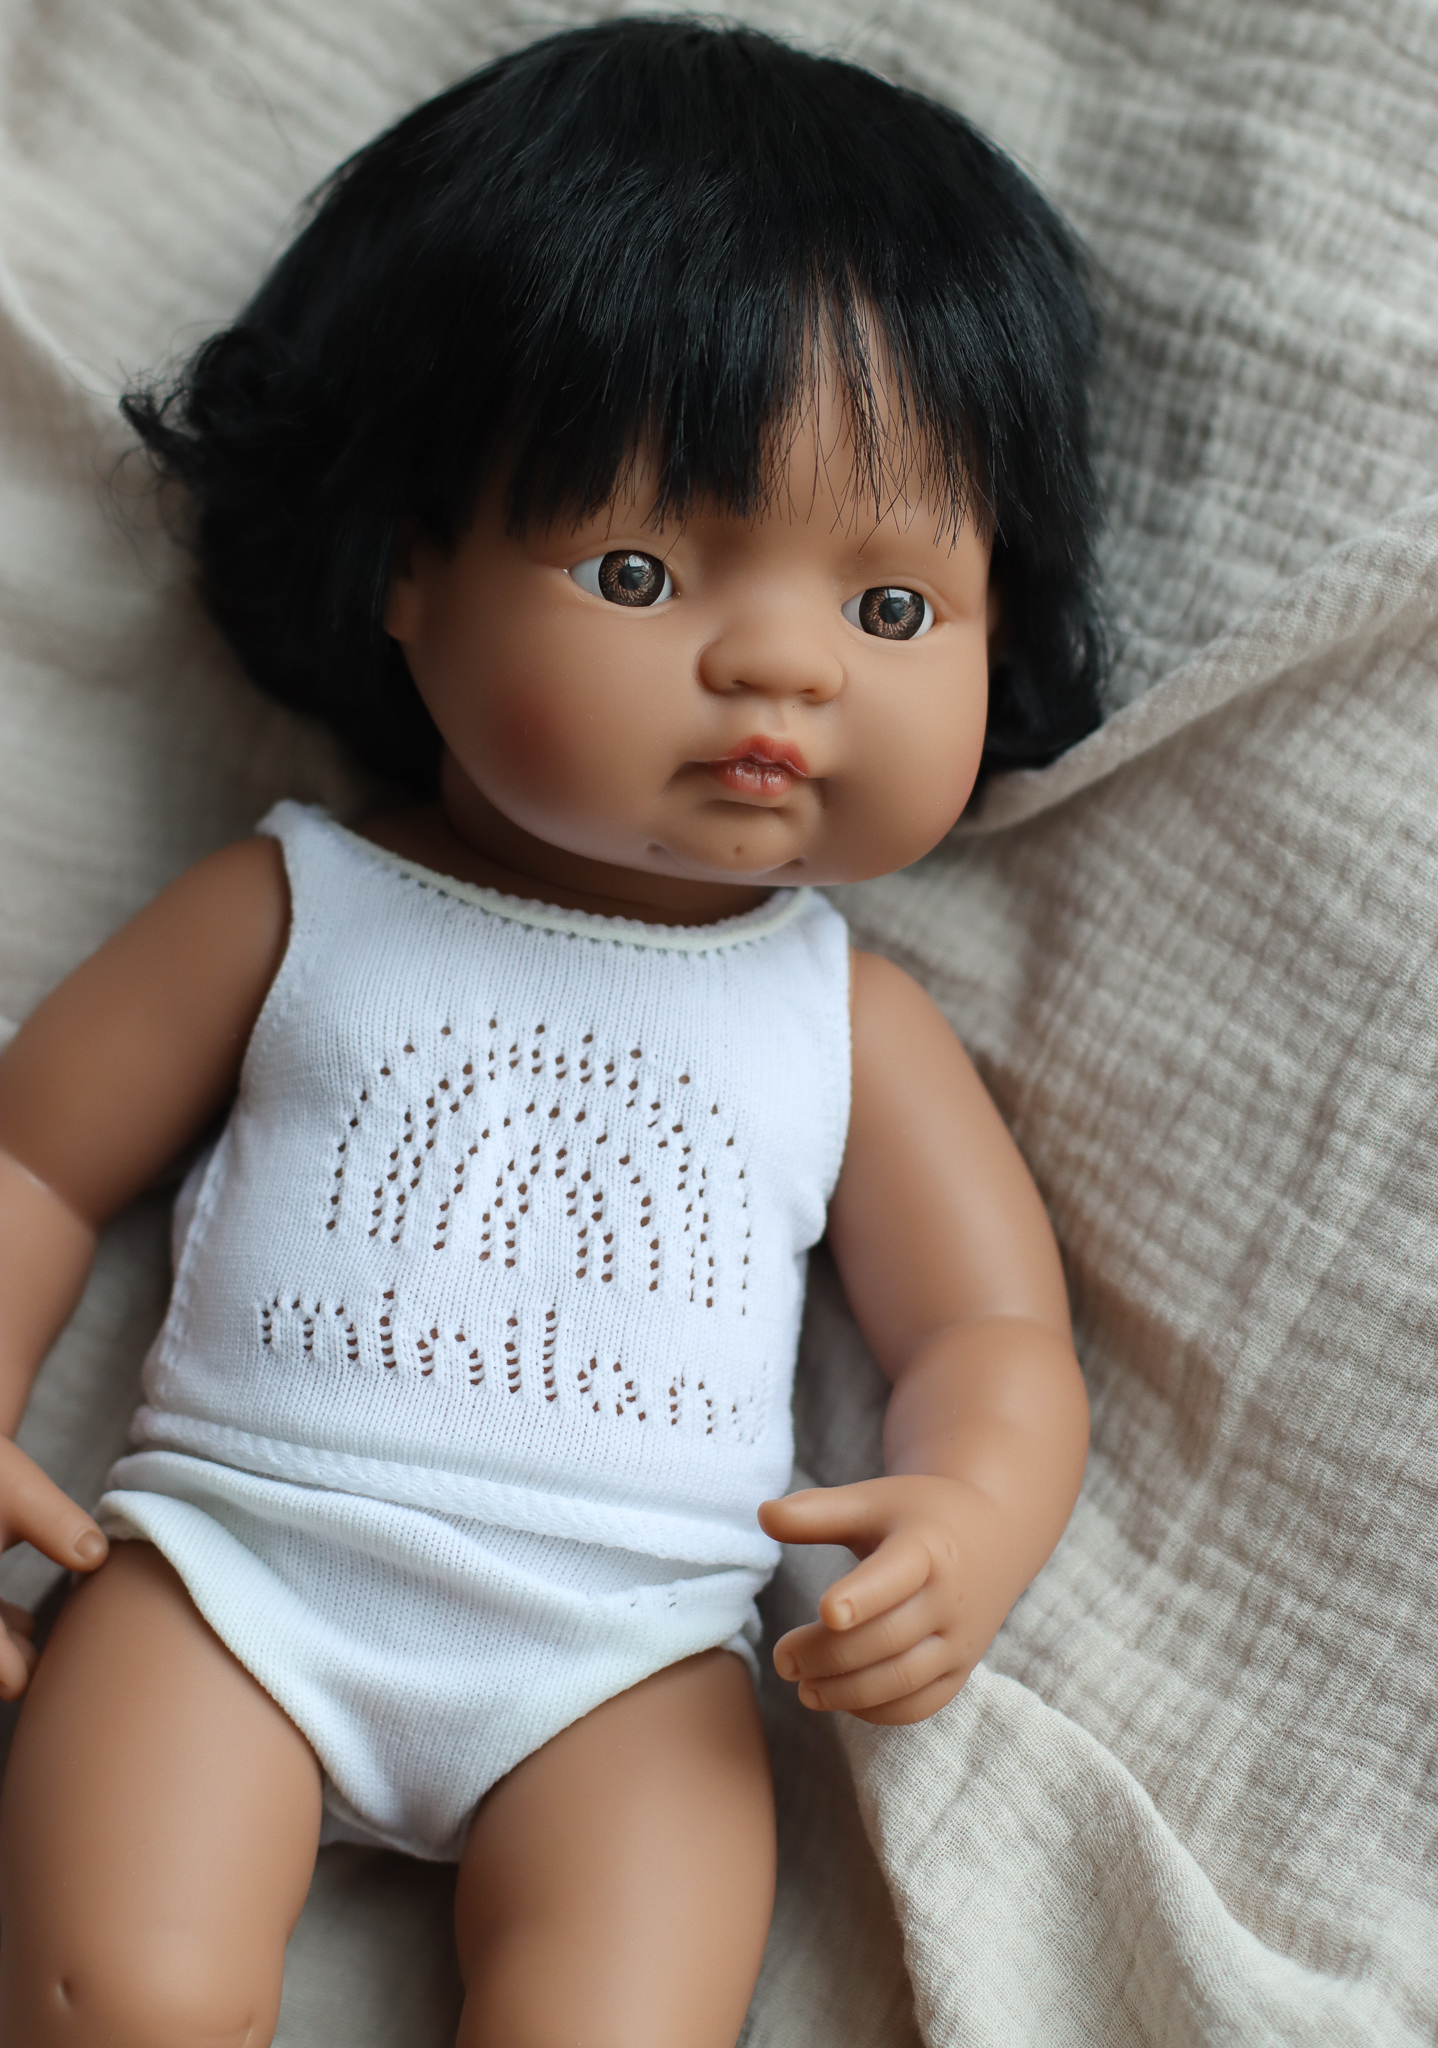 Baby Doll Hispanic Girl